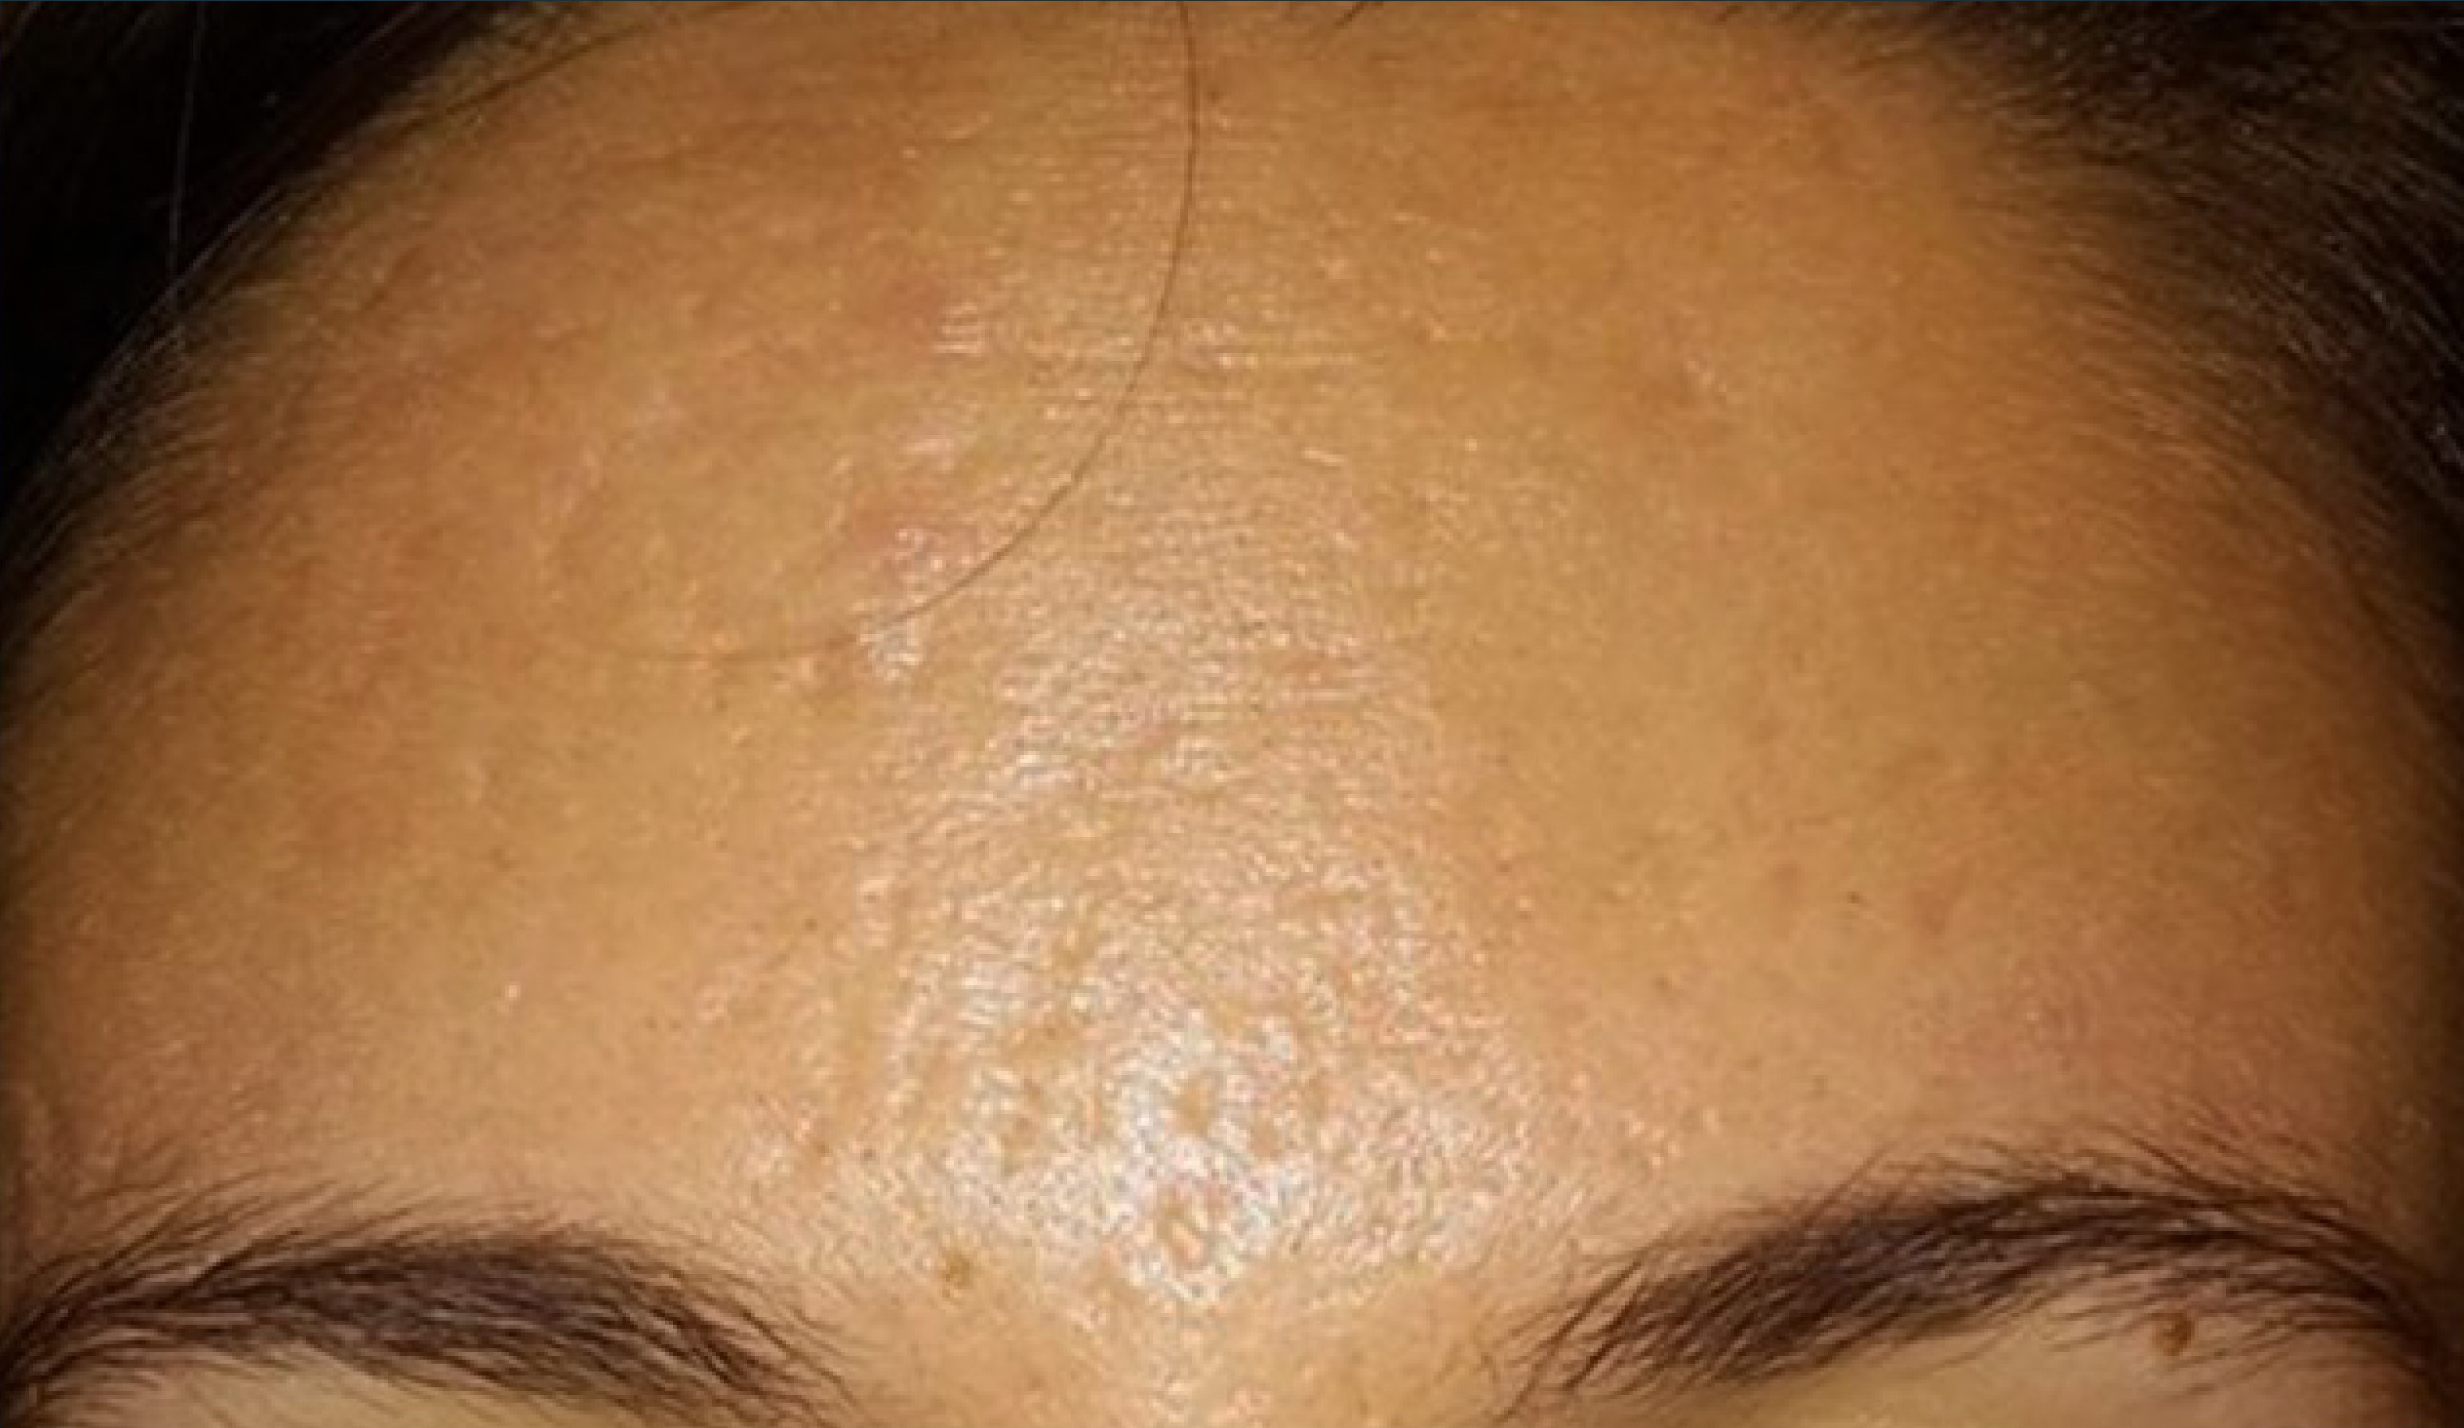 SkinPen Acne Treatment - Before